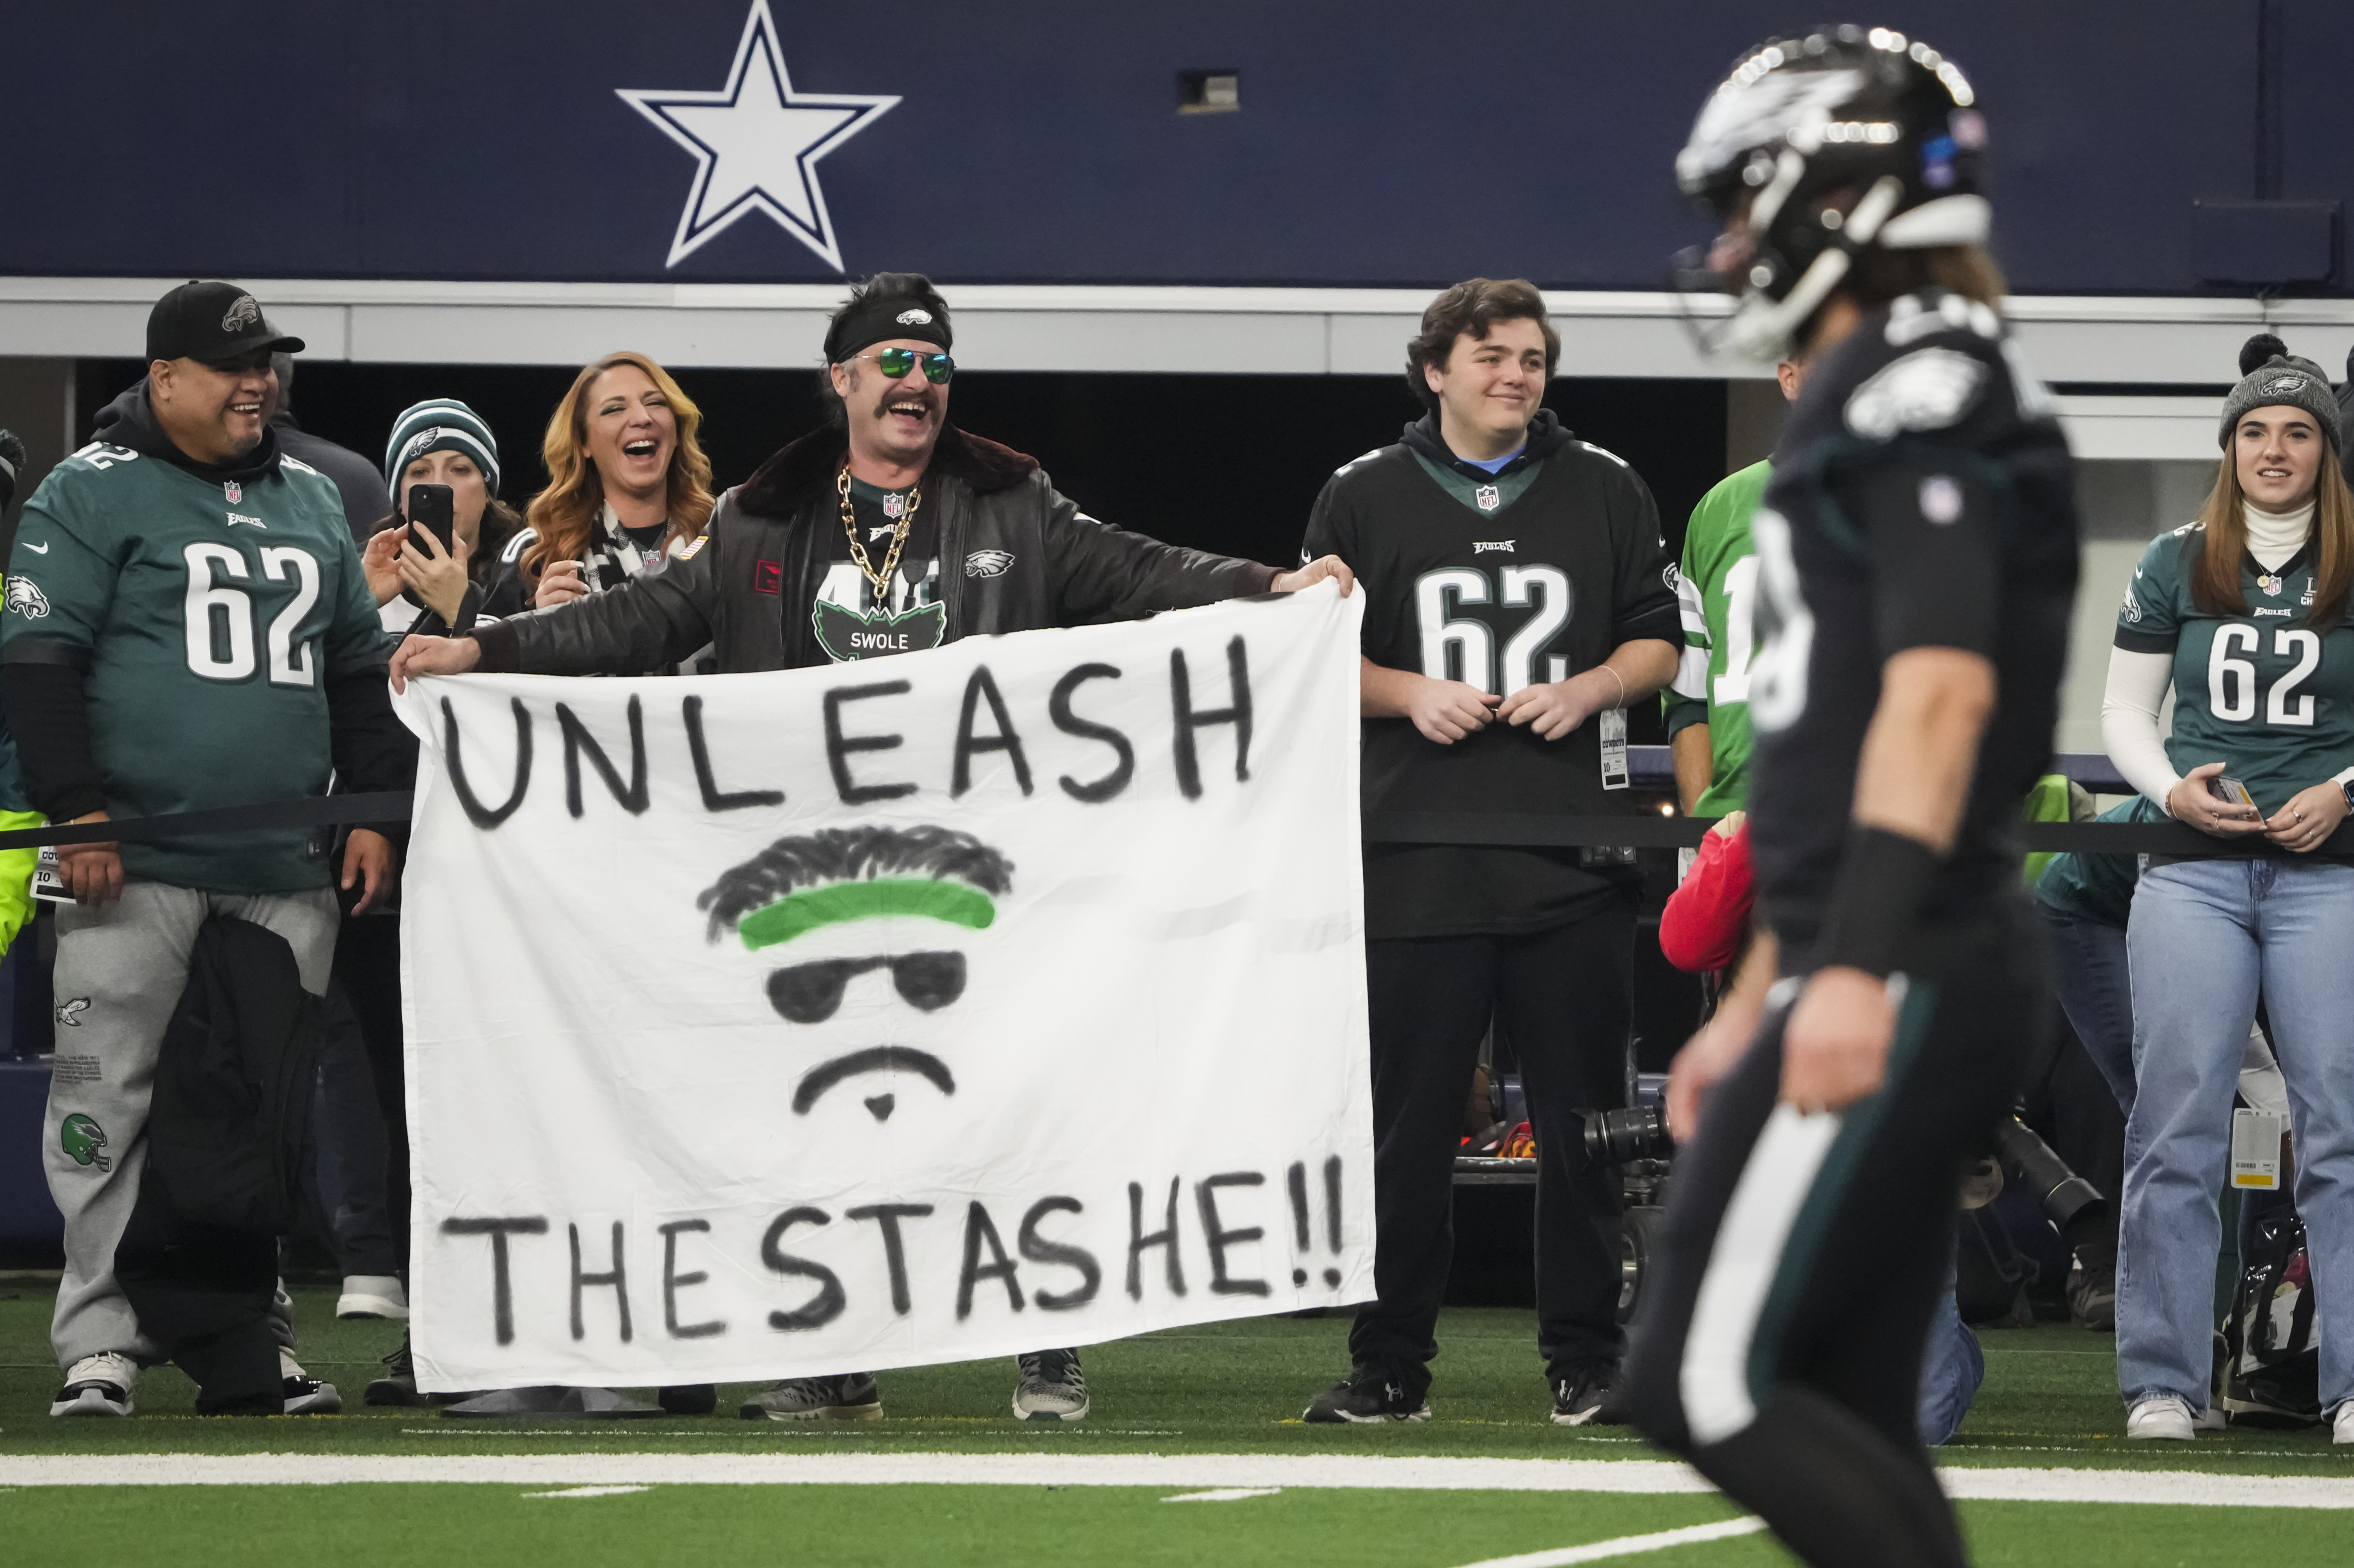 Cowboys sideline exclusive: Eagles fans made presence felt, but